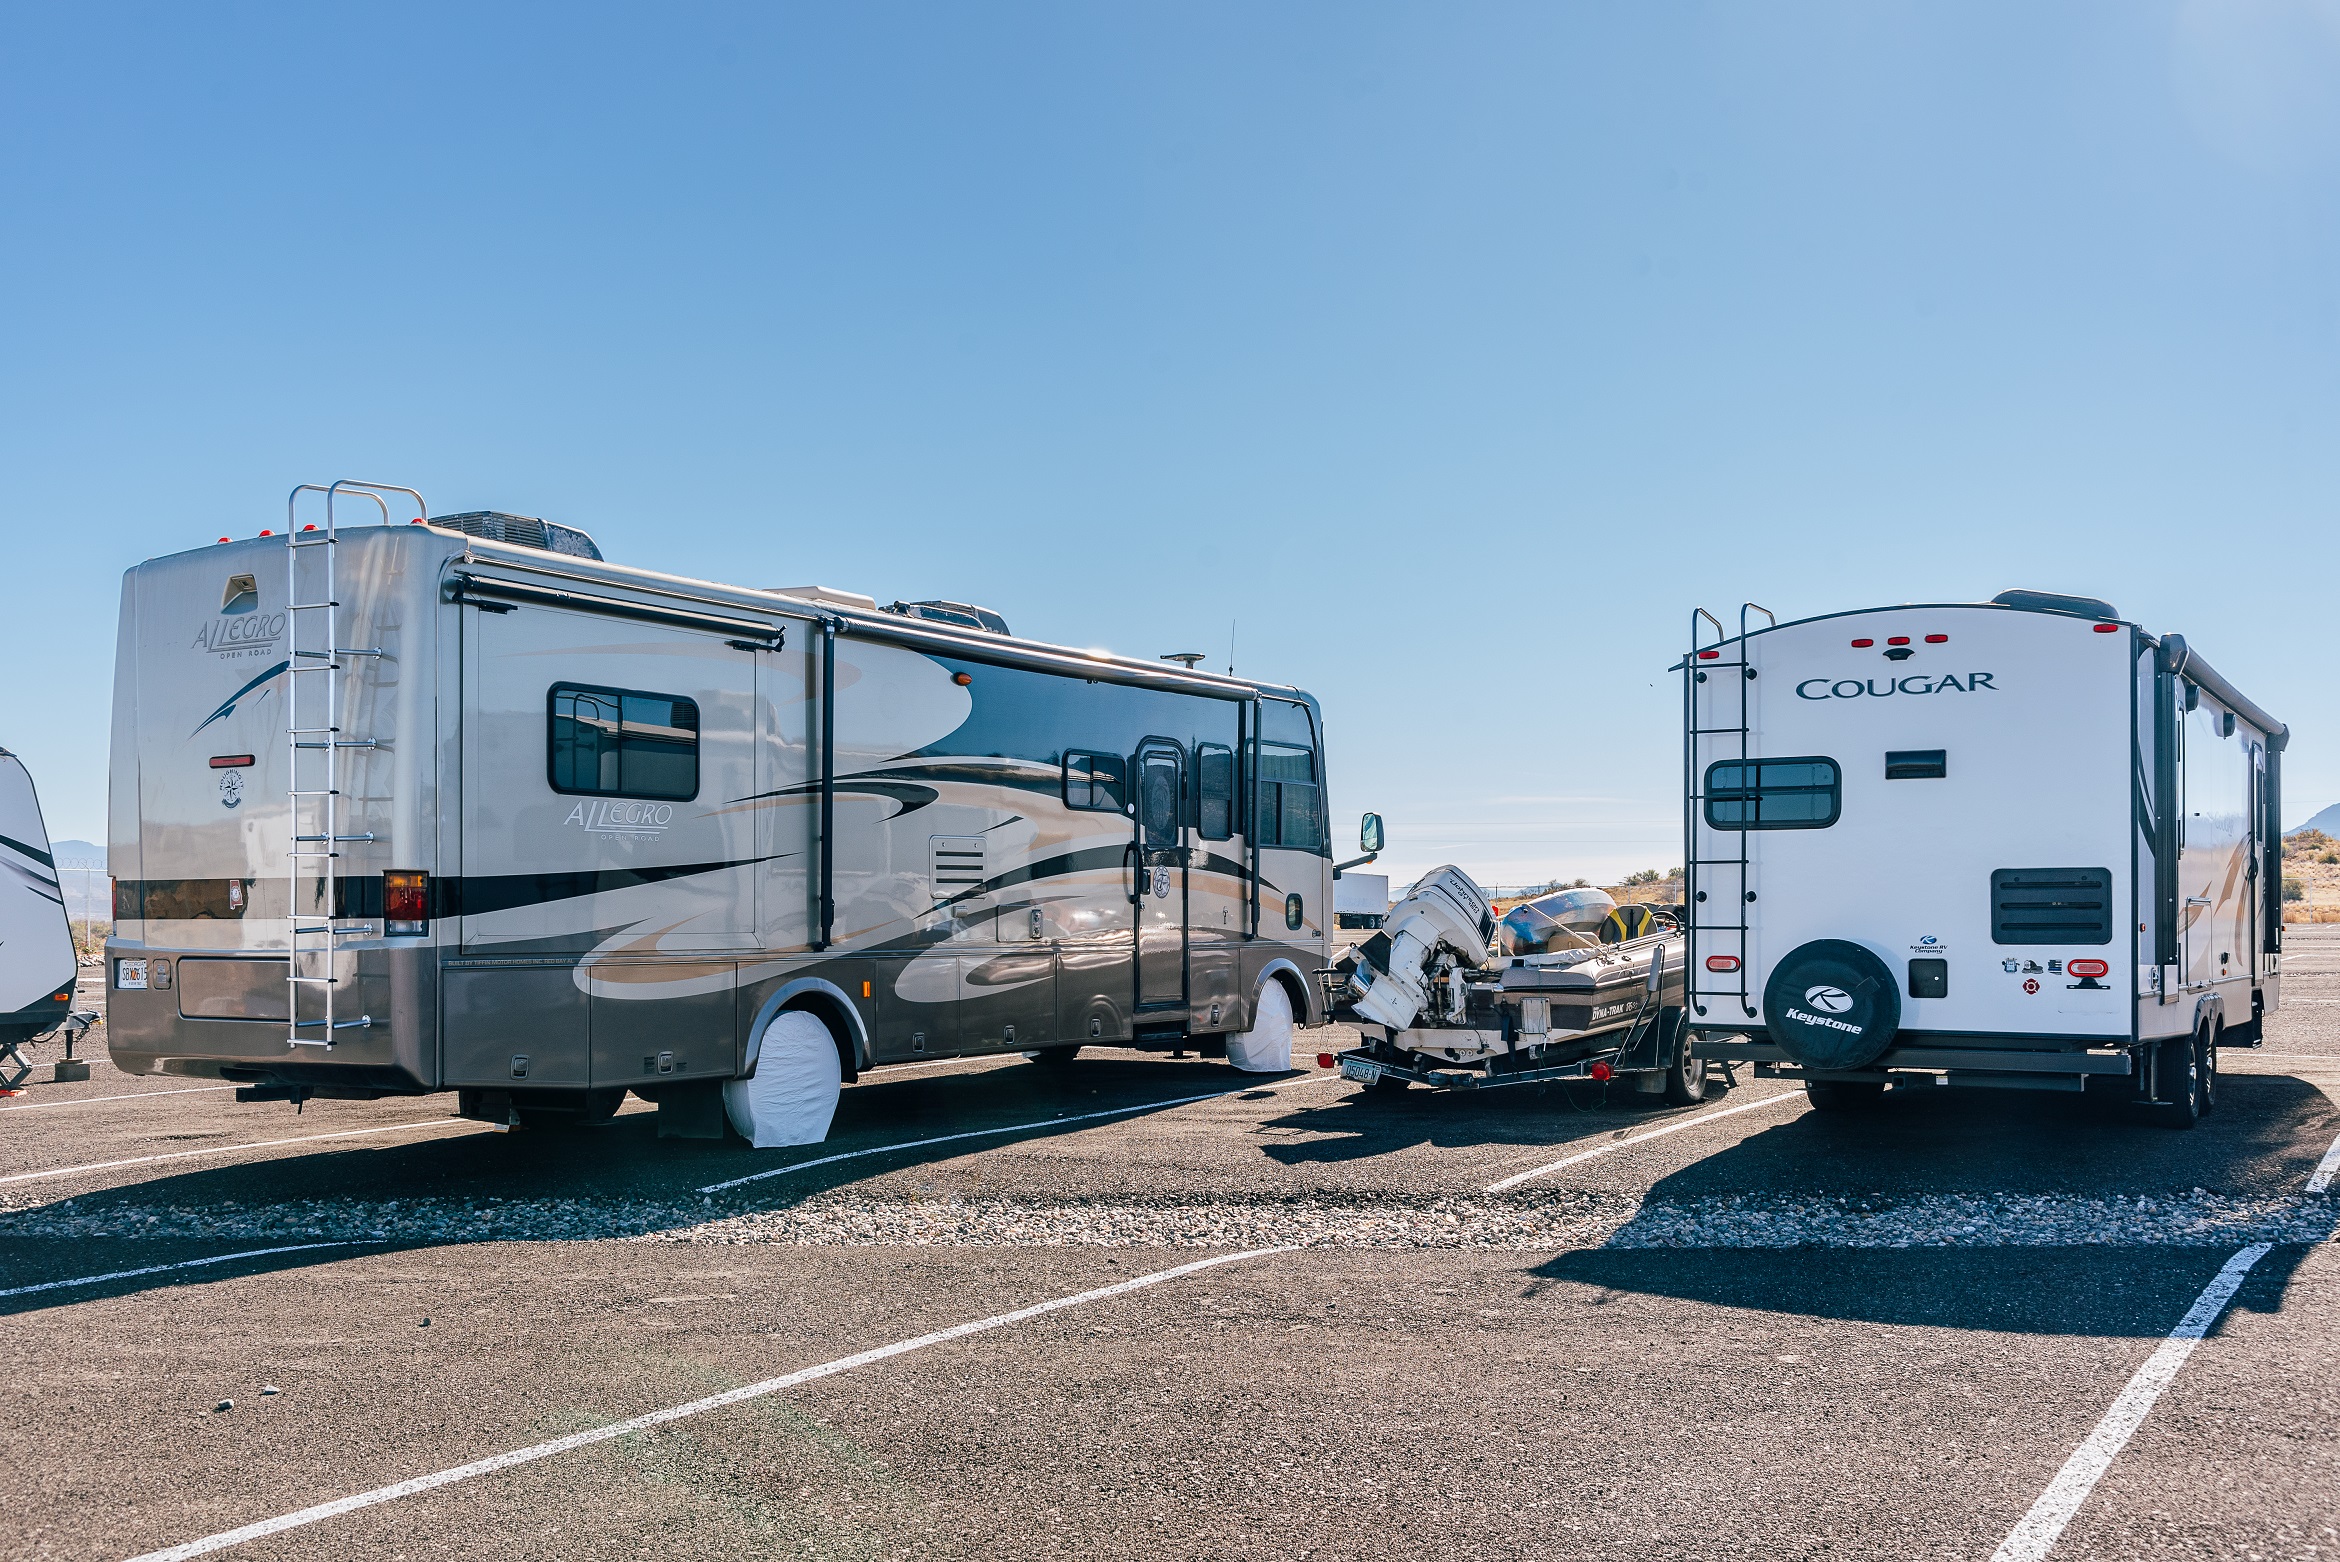 Boulder Creek RV Storage Camp Verde, AZ 86322, exterior RV parking